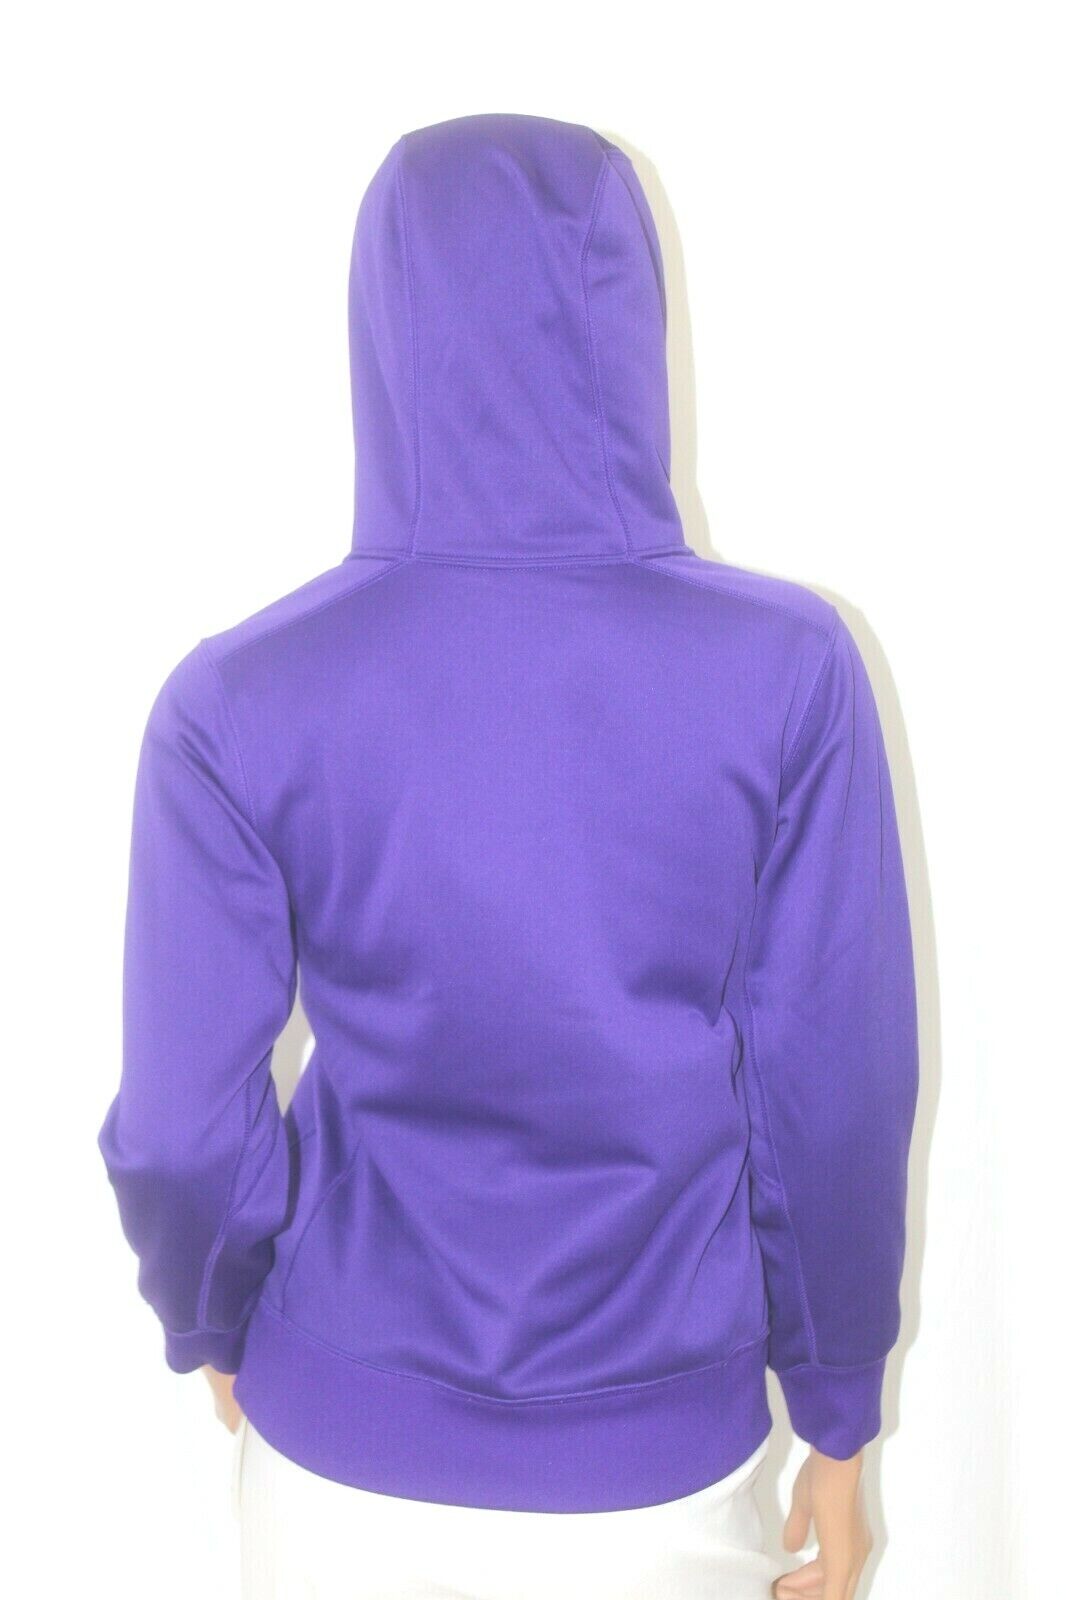 *NEW* Nike PurpleTherma Fit Hoodie Youth Large